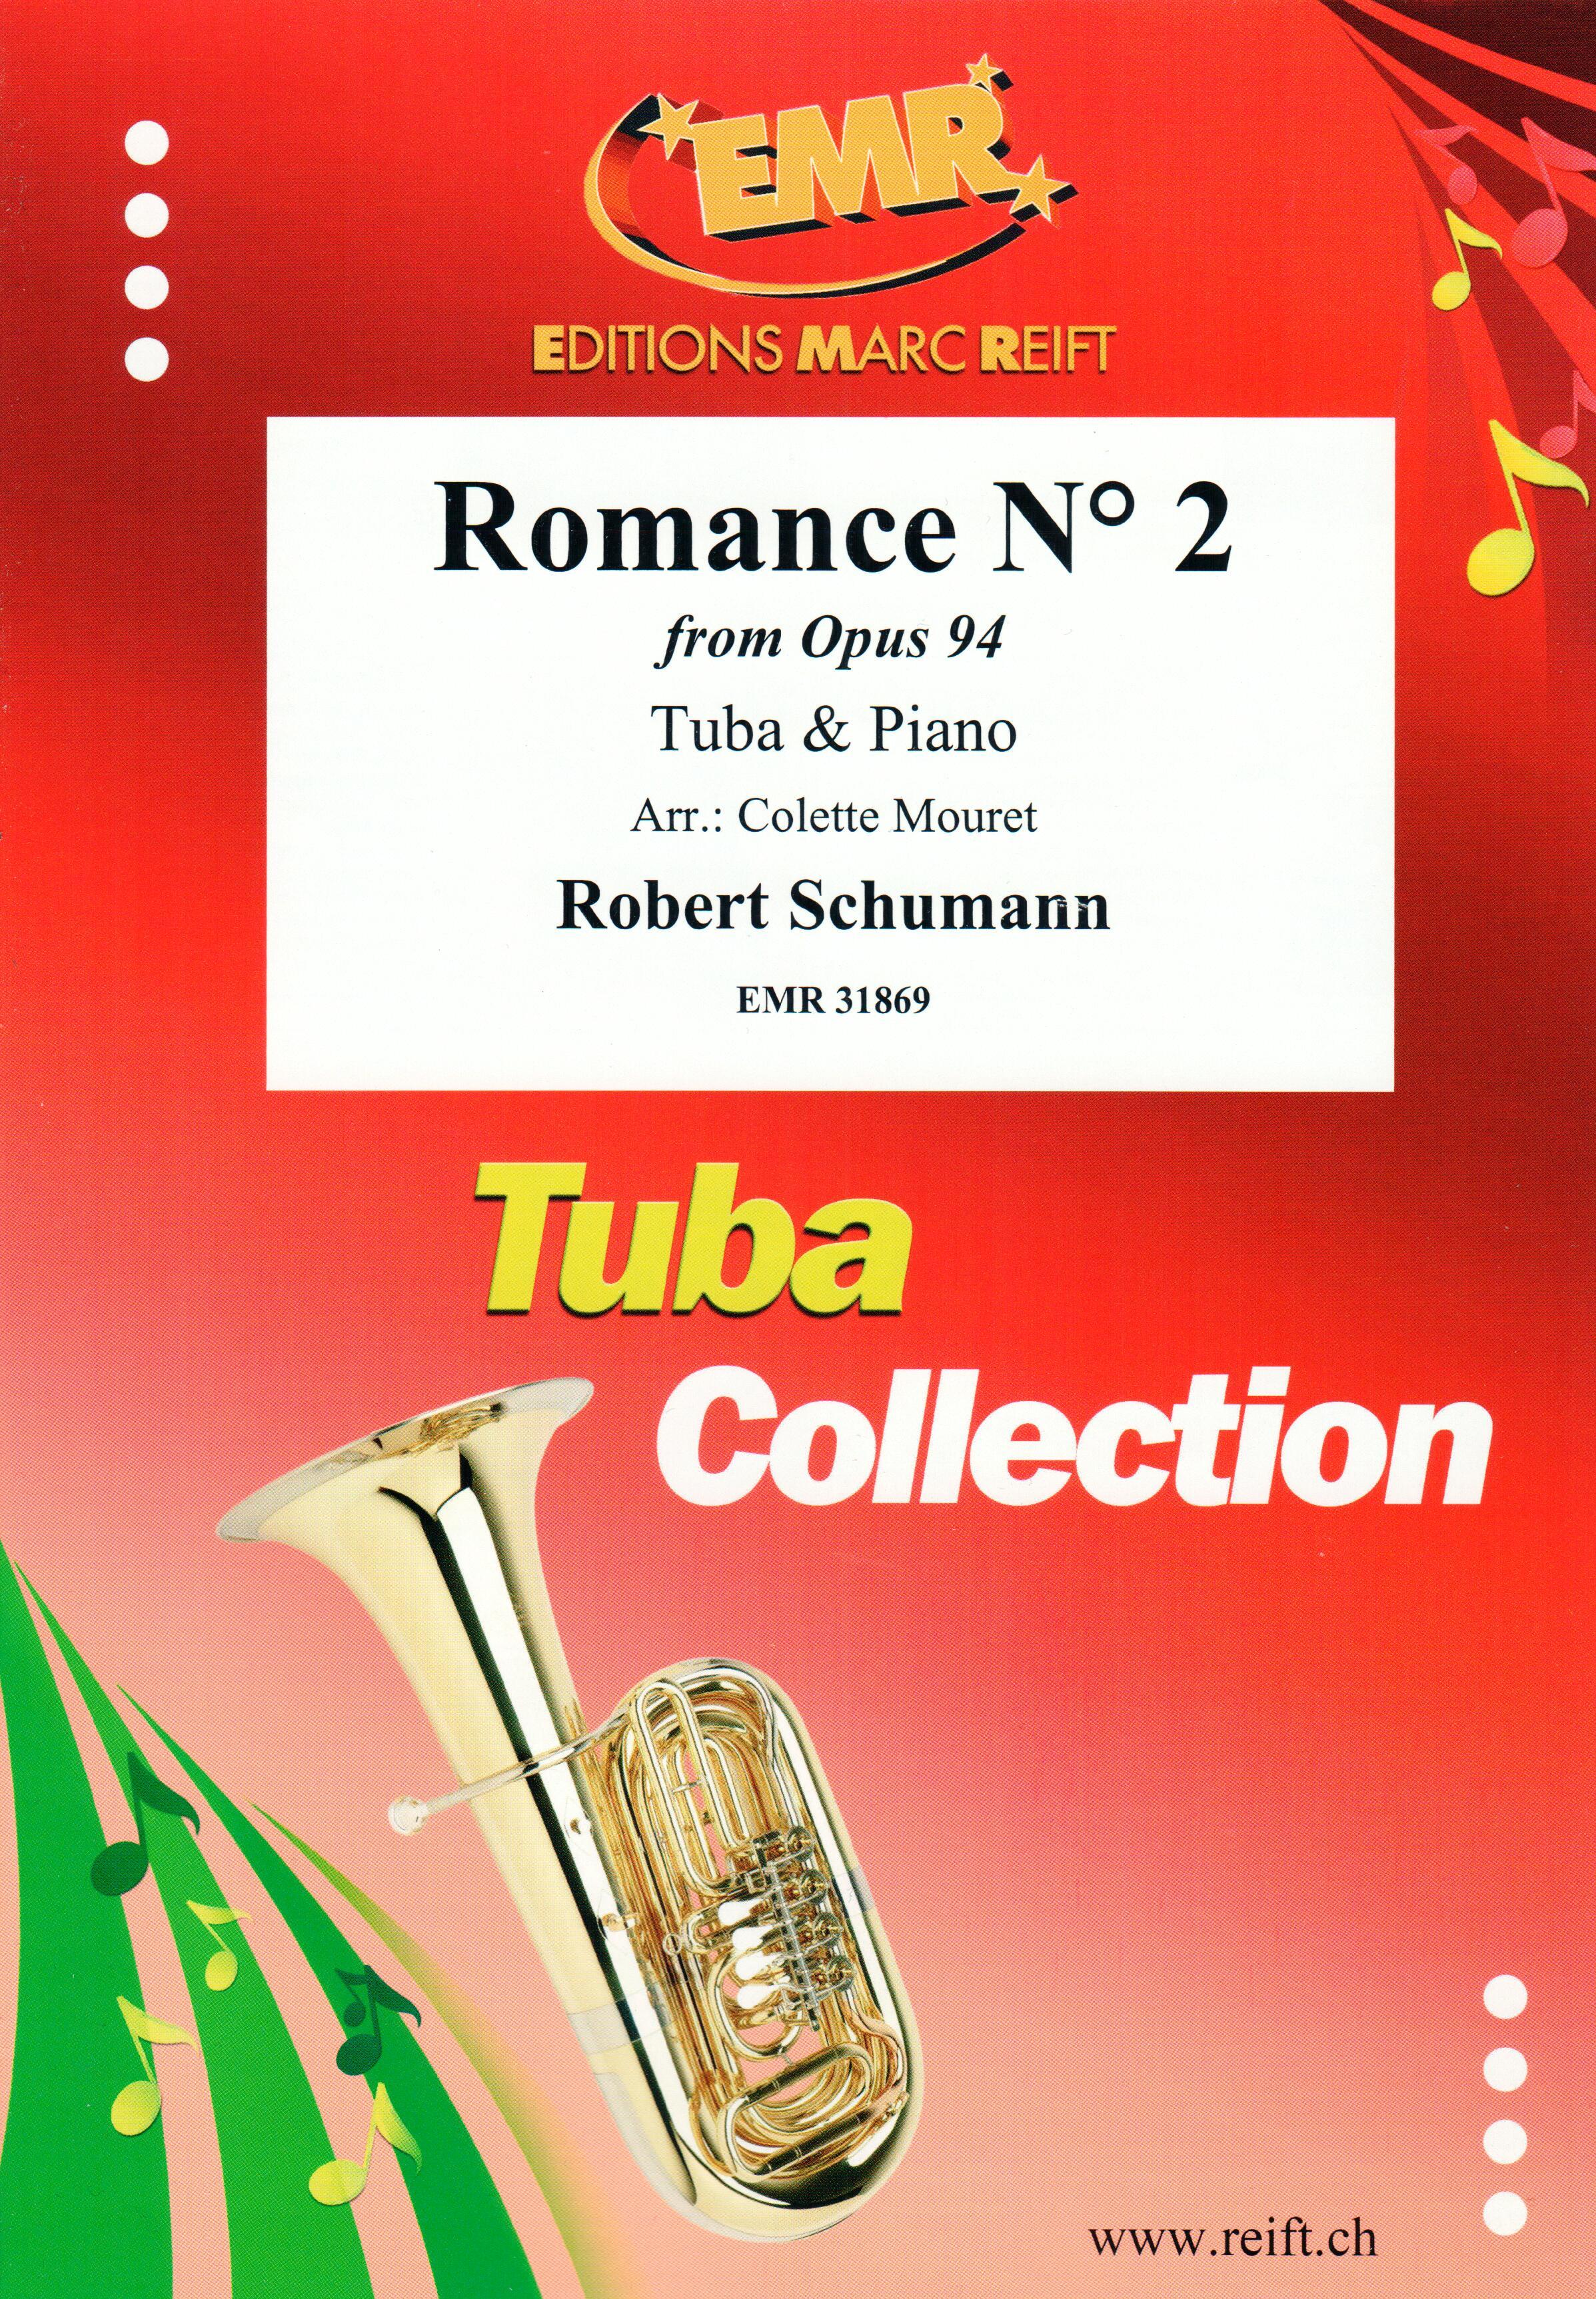 ROMANCE N° 2, SOLOS - E♭. Bass